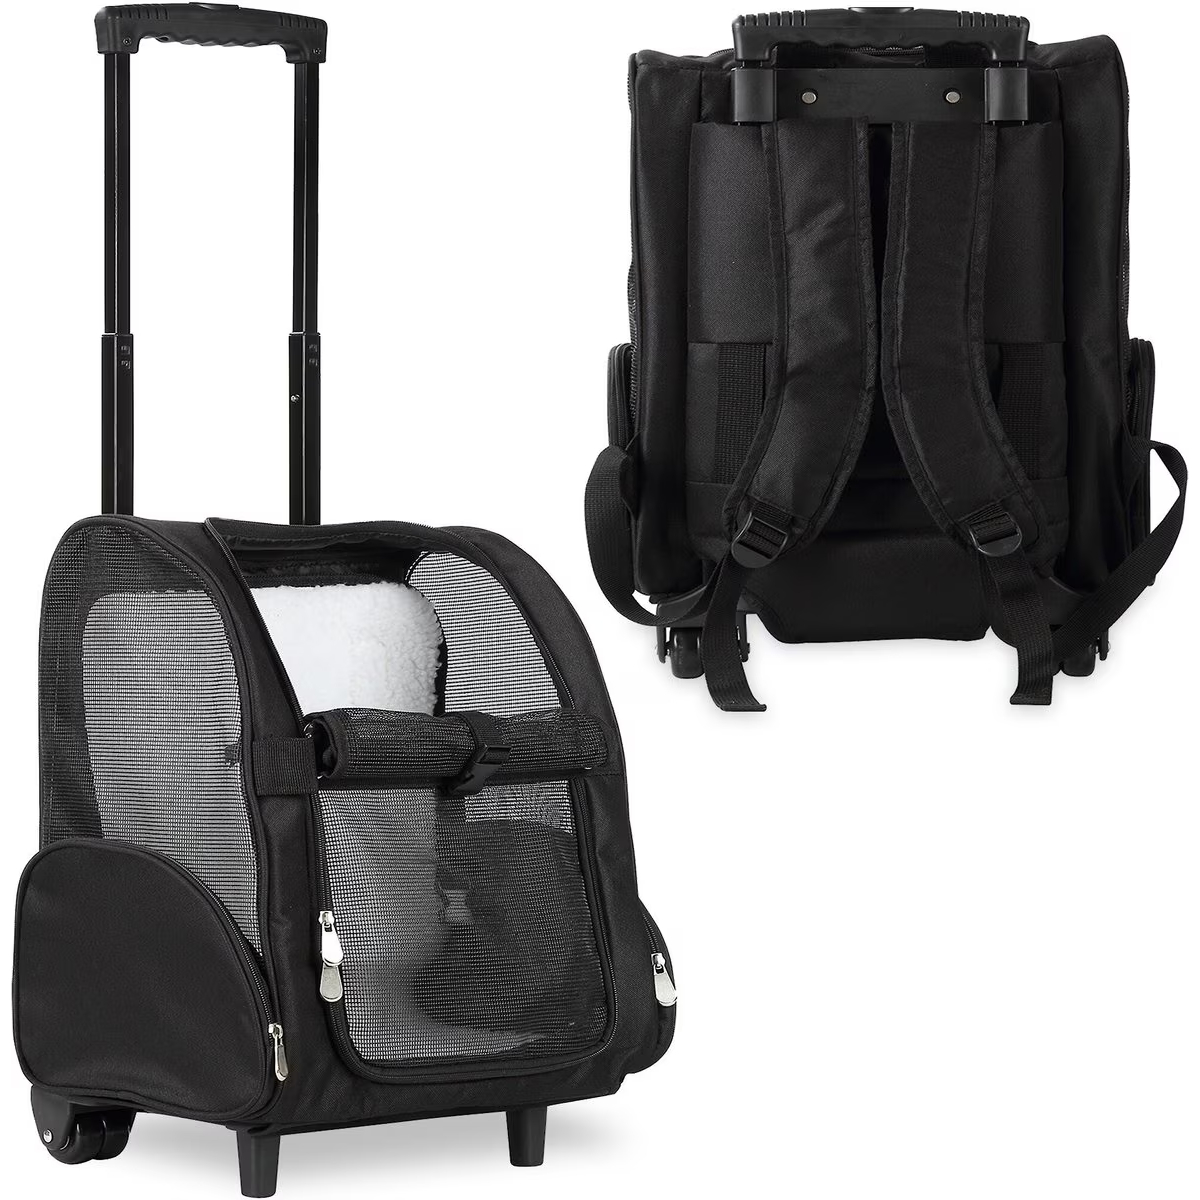 KOPEKS Deluxe Backpack Dog & Cat Carrier, Large new